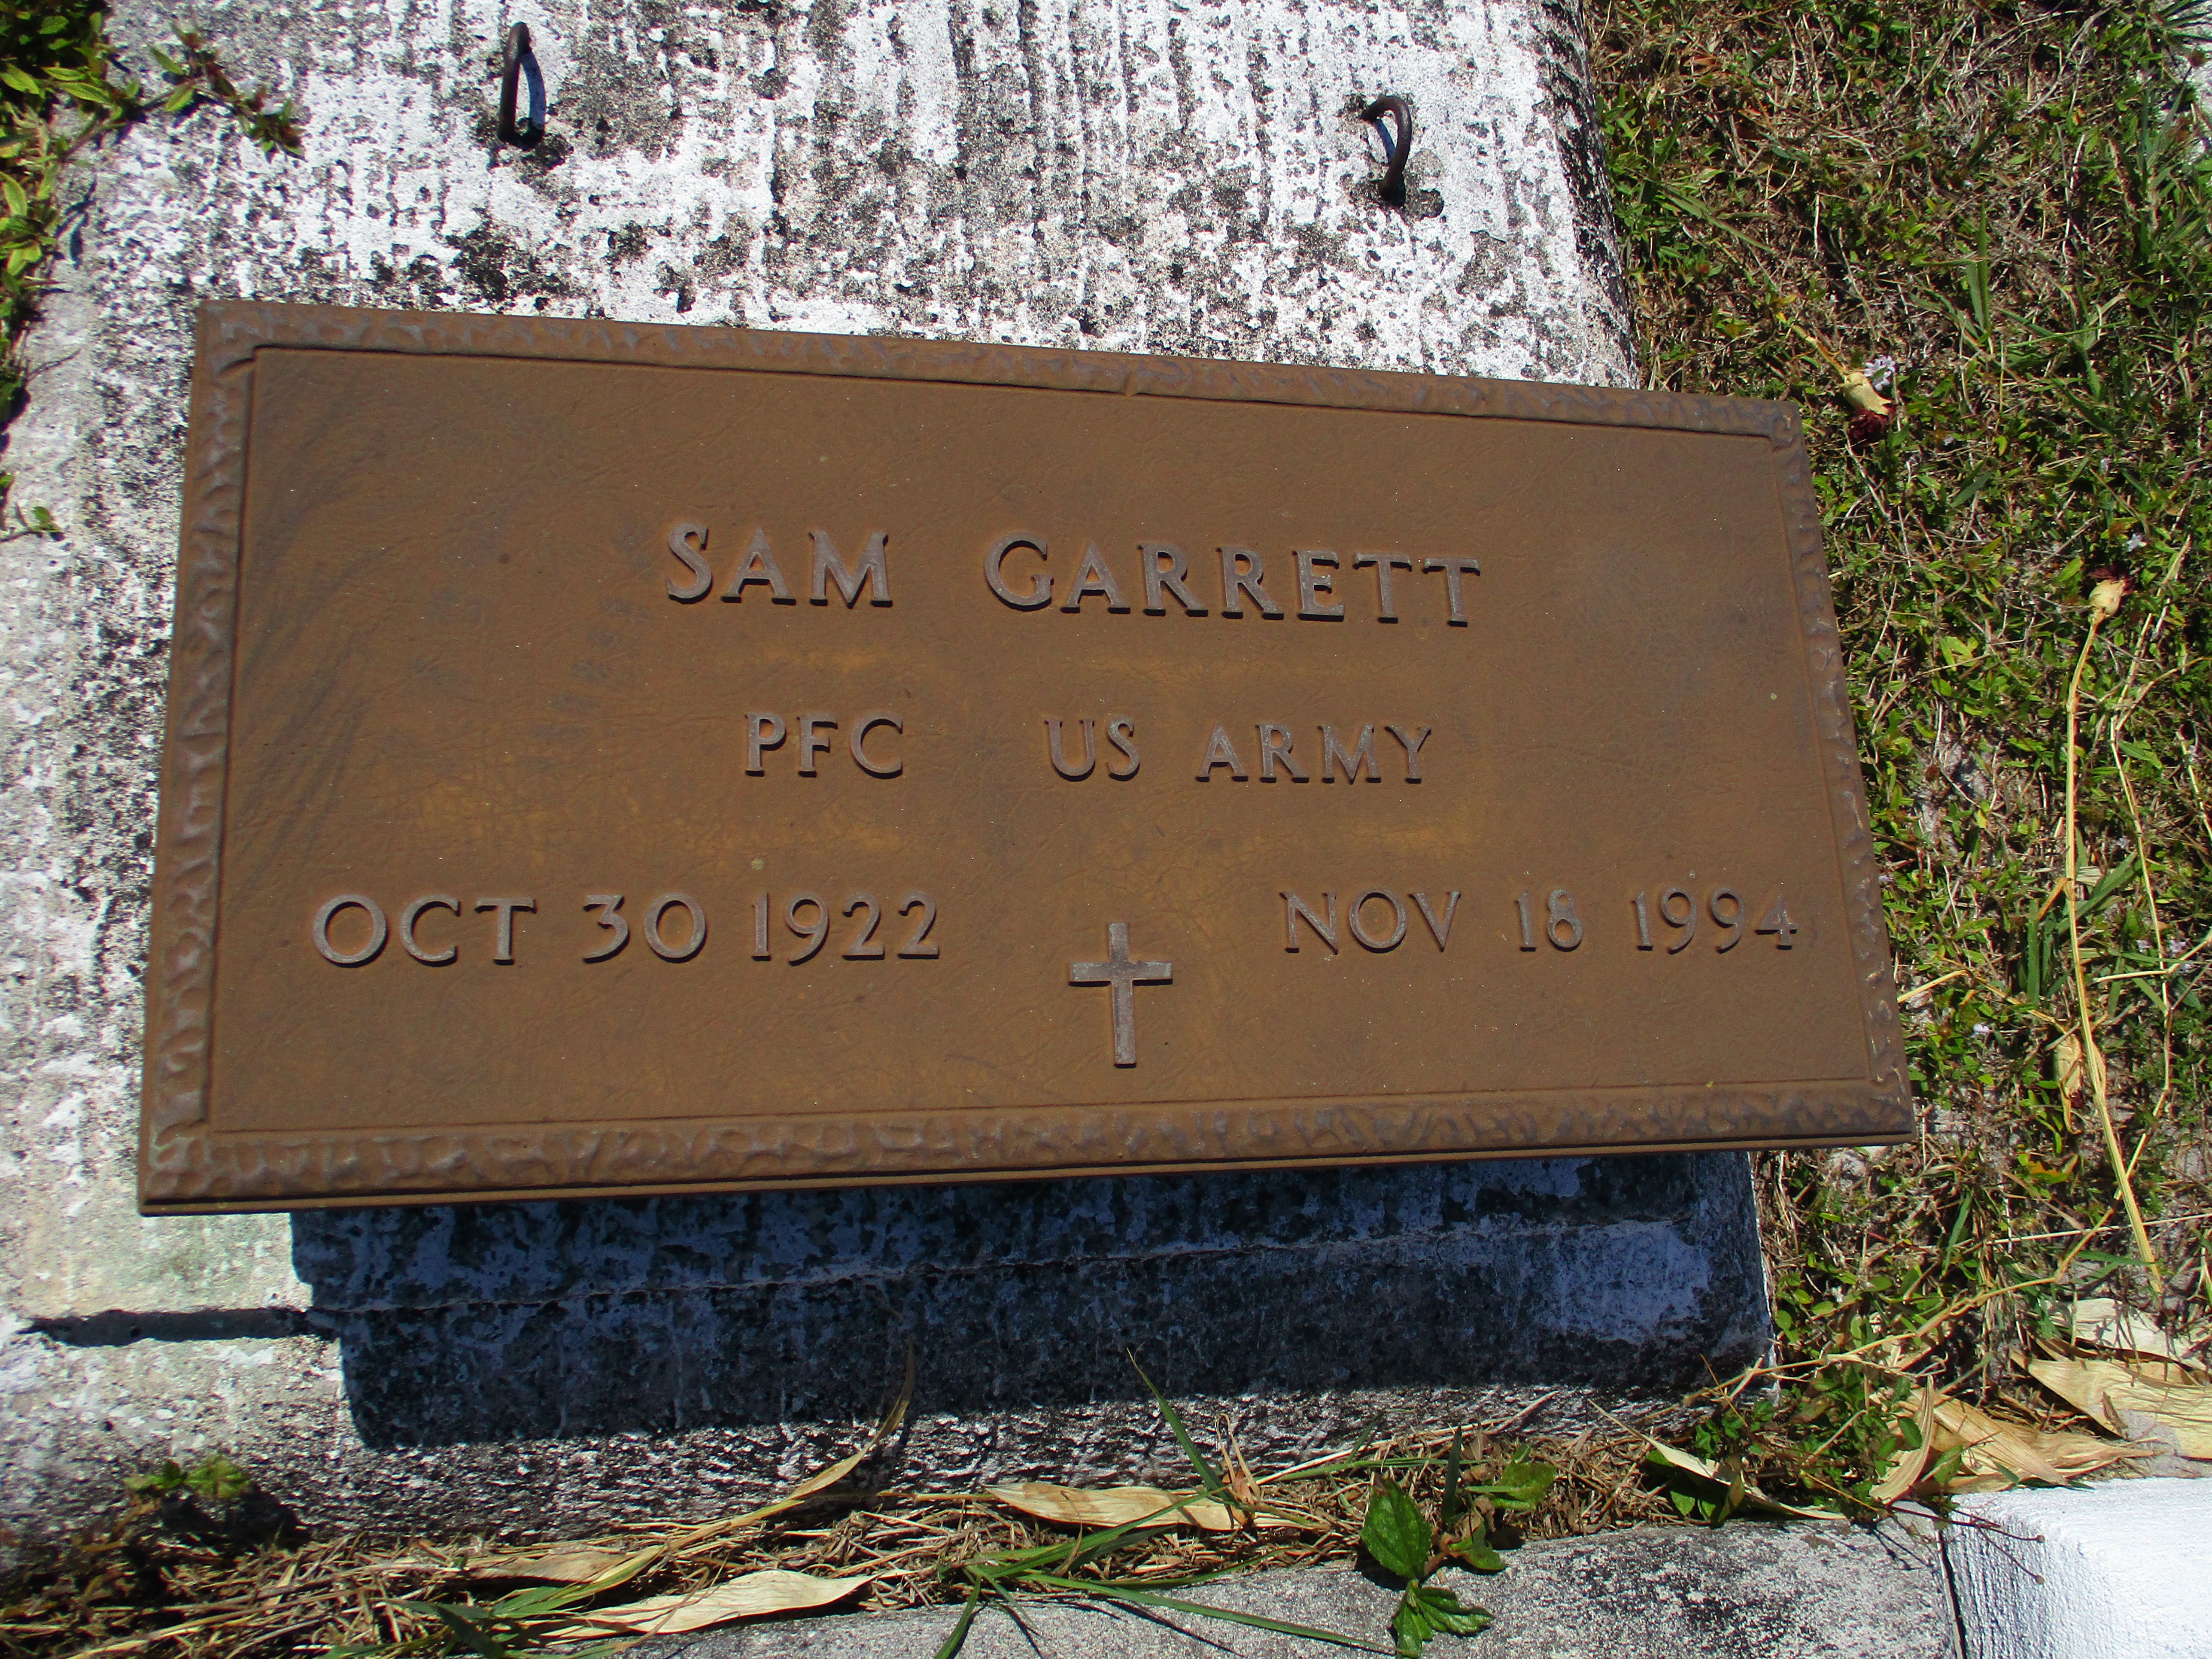 PFC Sam Garrett